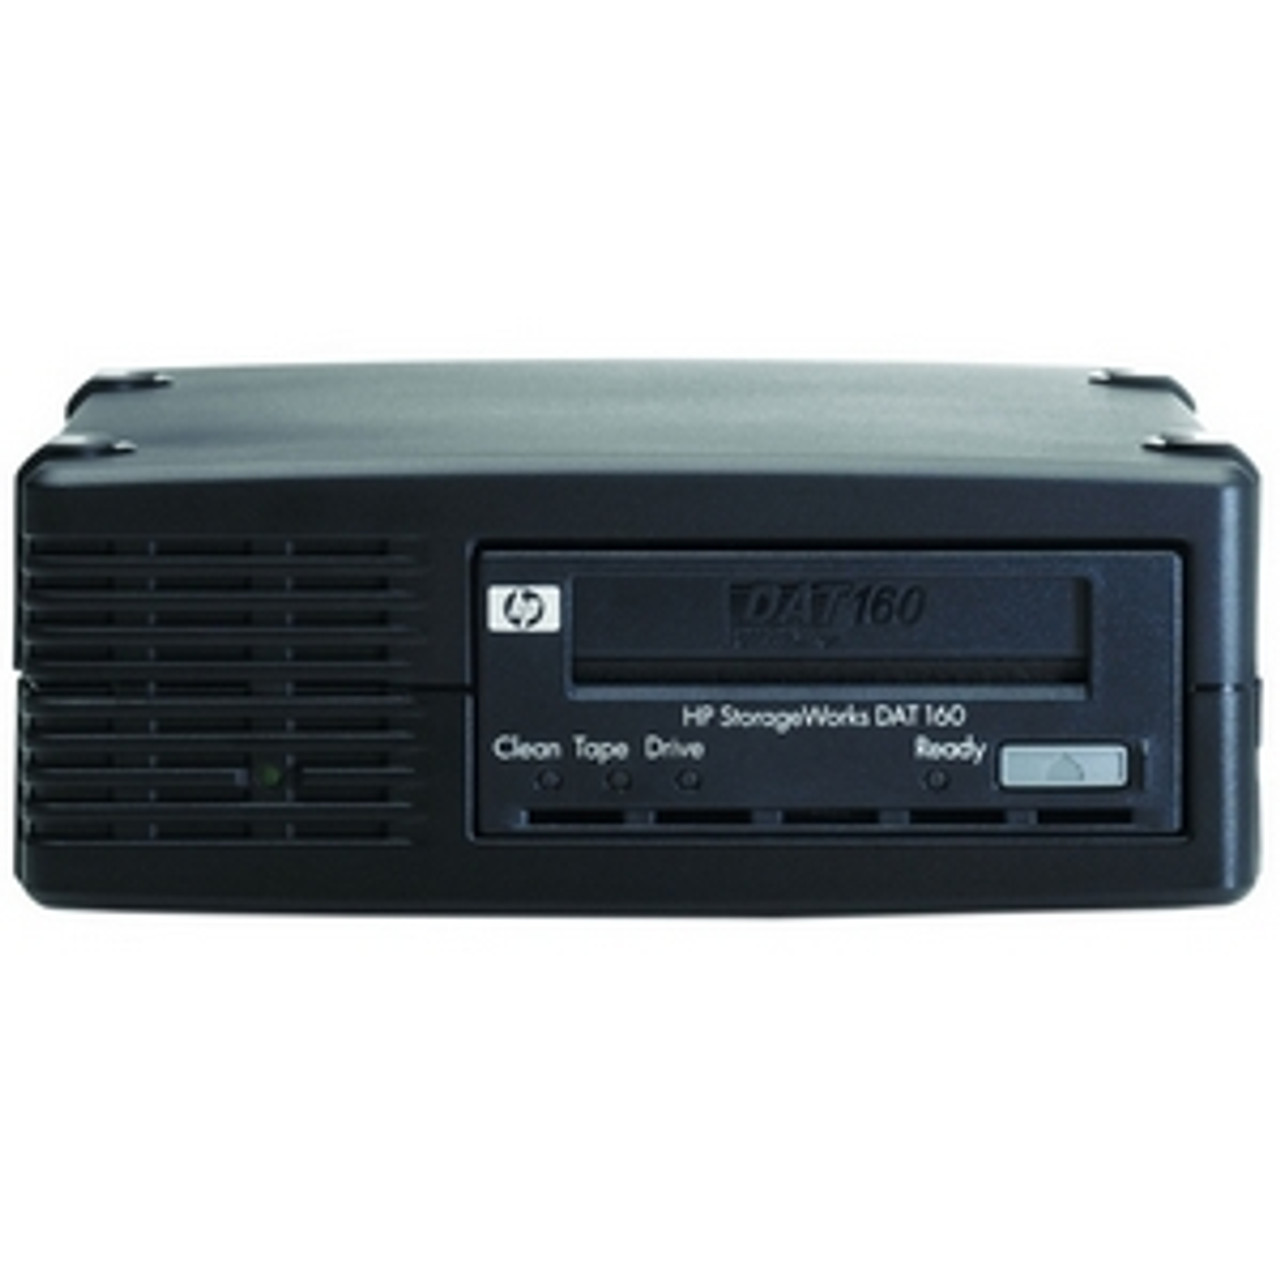 Q1573A - HP Storageworks DAT160 80GB (Native)/160GB (Compressed) DDS-4 SCSI LVD Internal Tape Drive